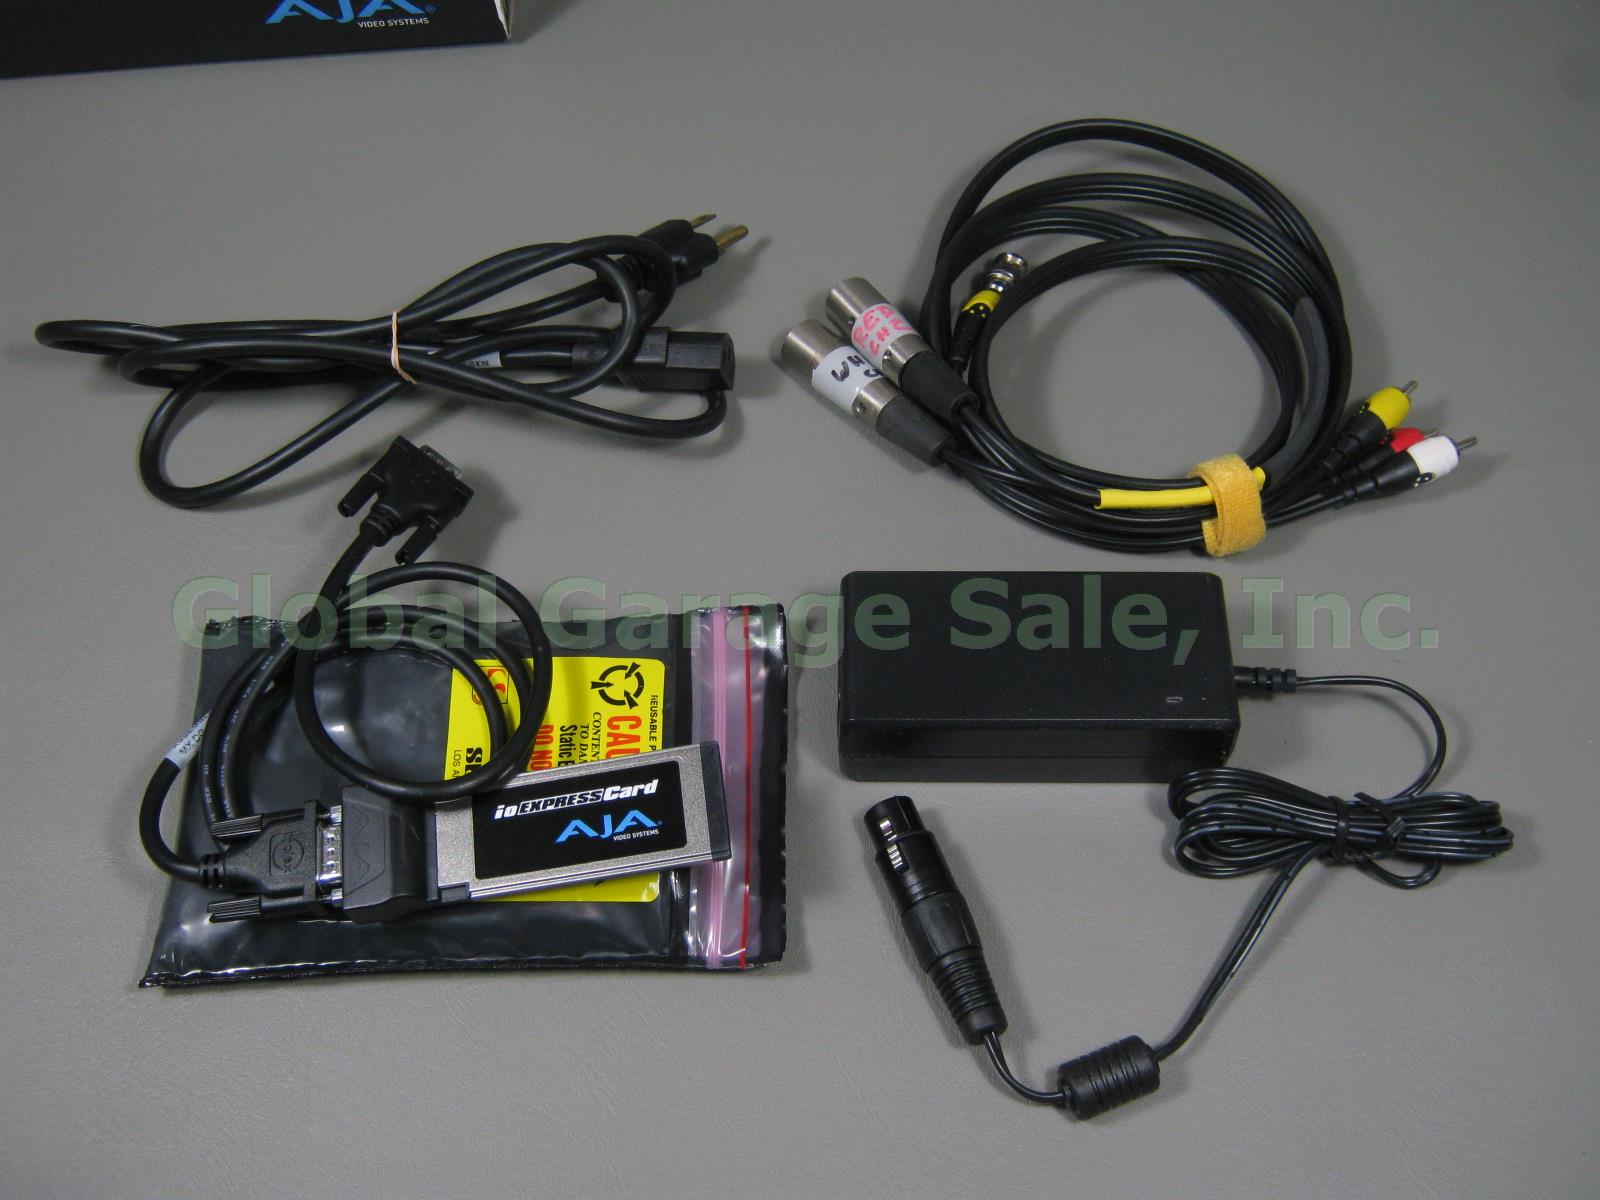 AJA IO I/O Express Desktop Video Audio Interface Hardware + Card AC Power Cables 3